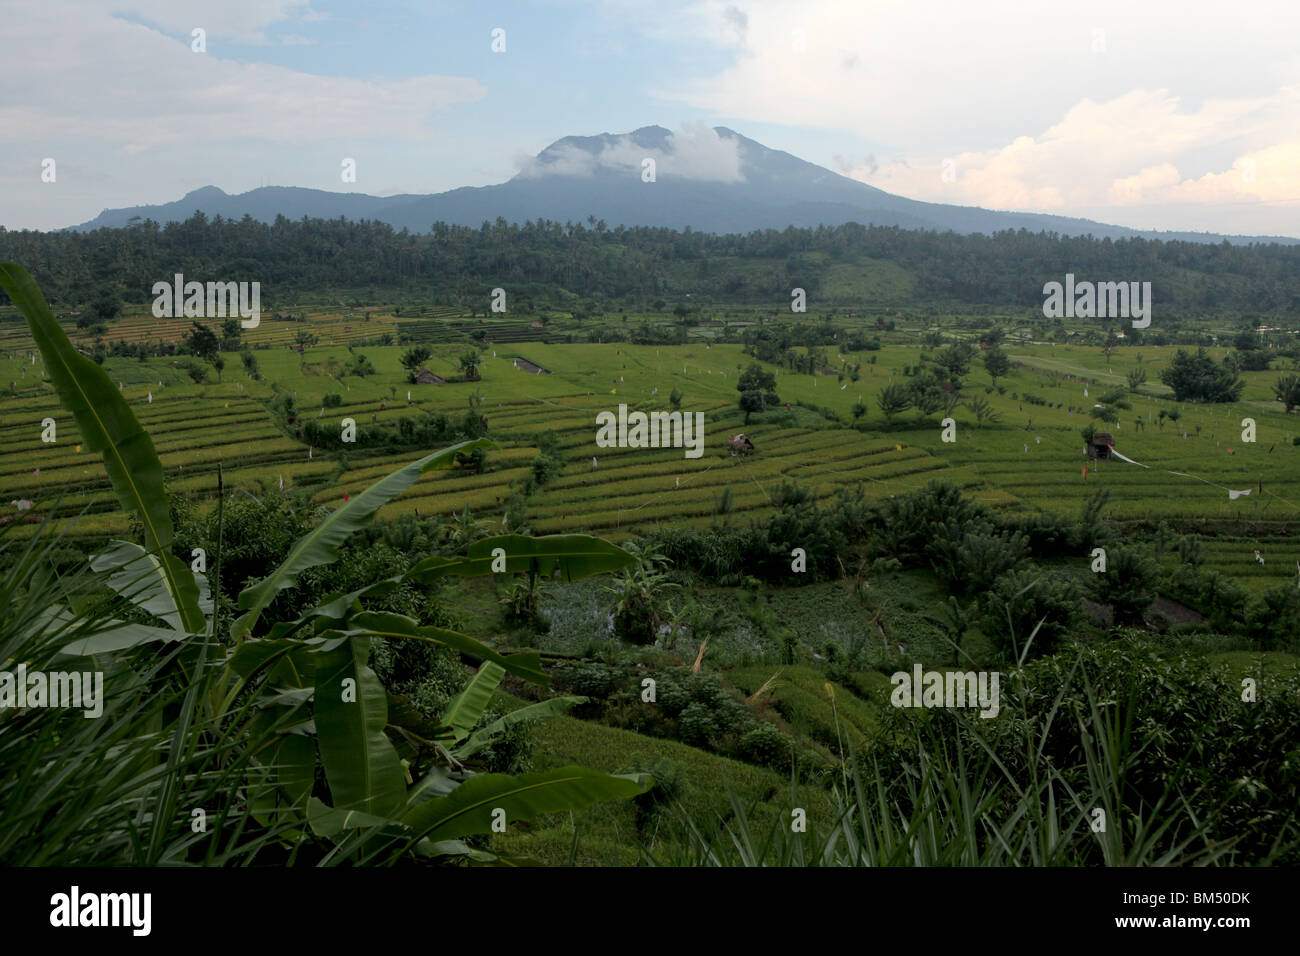 Terraced rice fields near Tirtagangga with the volcanic peak of Gunung Lempuyang on the horizon in Bali, Indonesia. Stock Photo